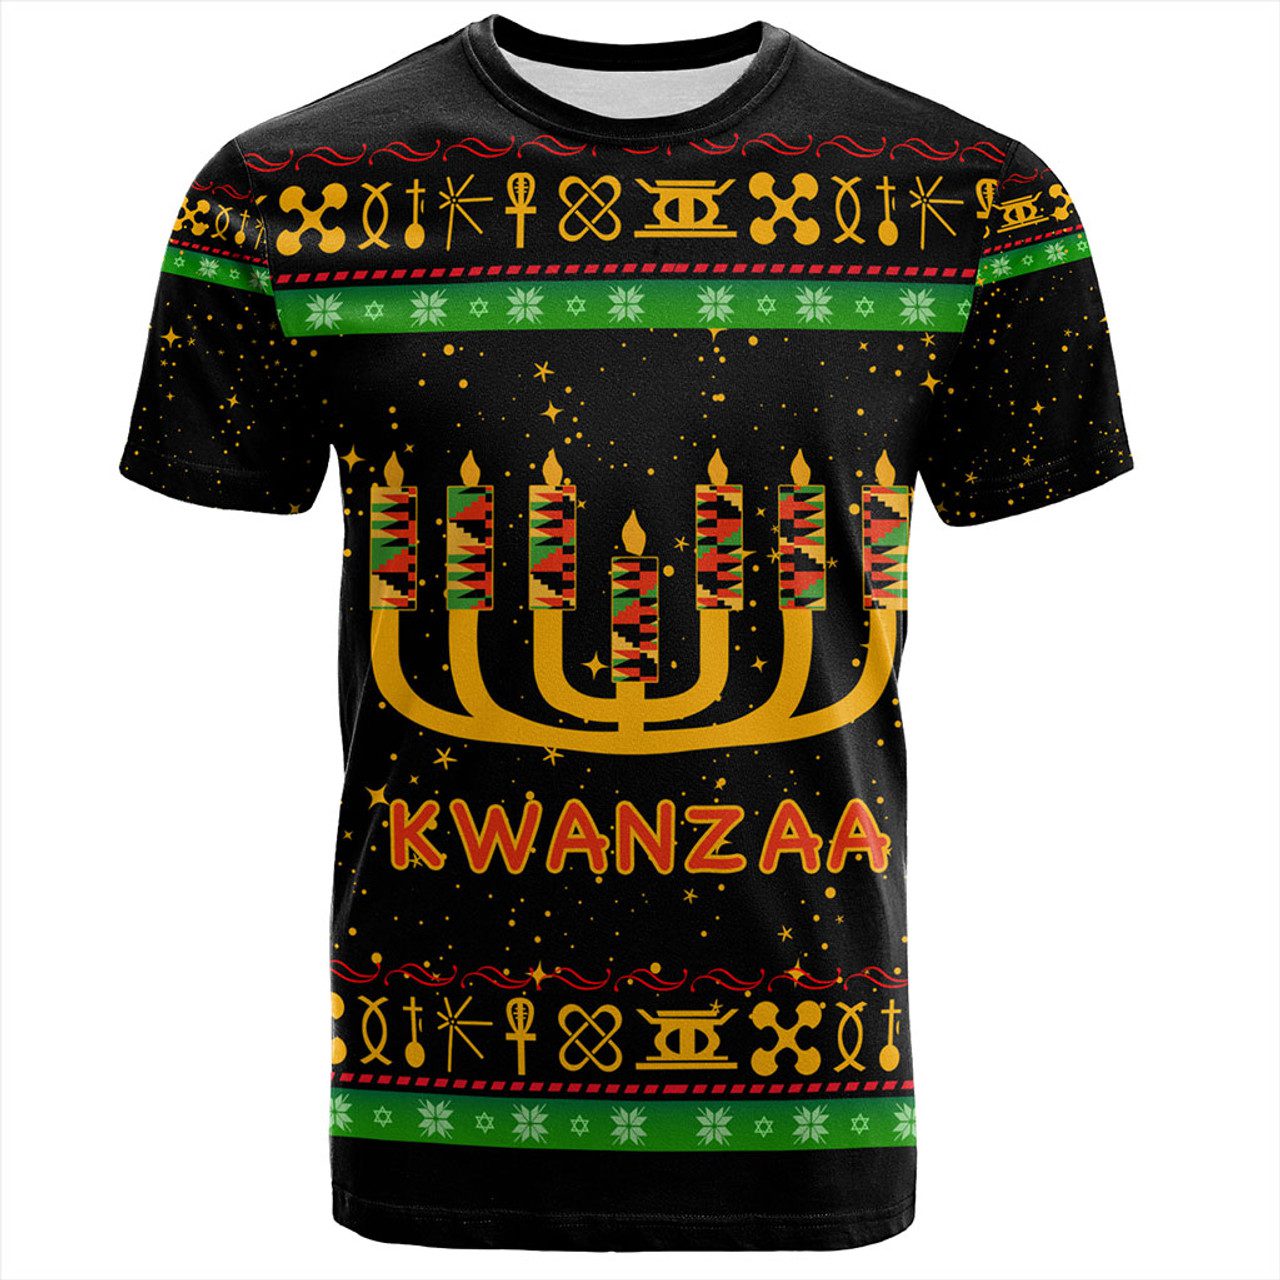 Kwanzaa T-Shirt Africa Culture Pattern Christmas